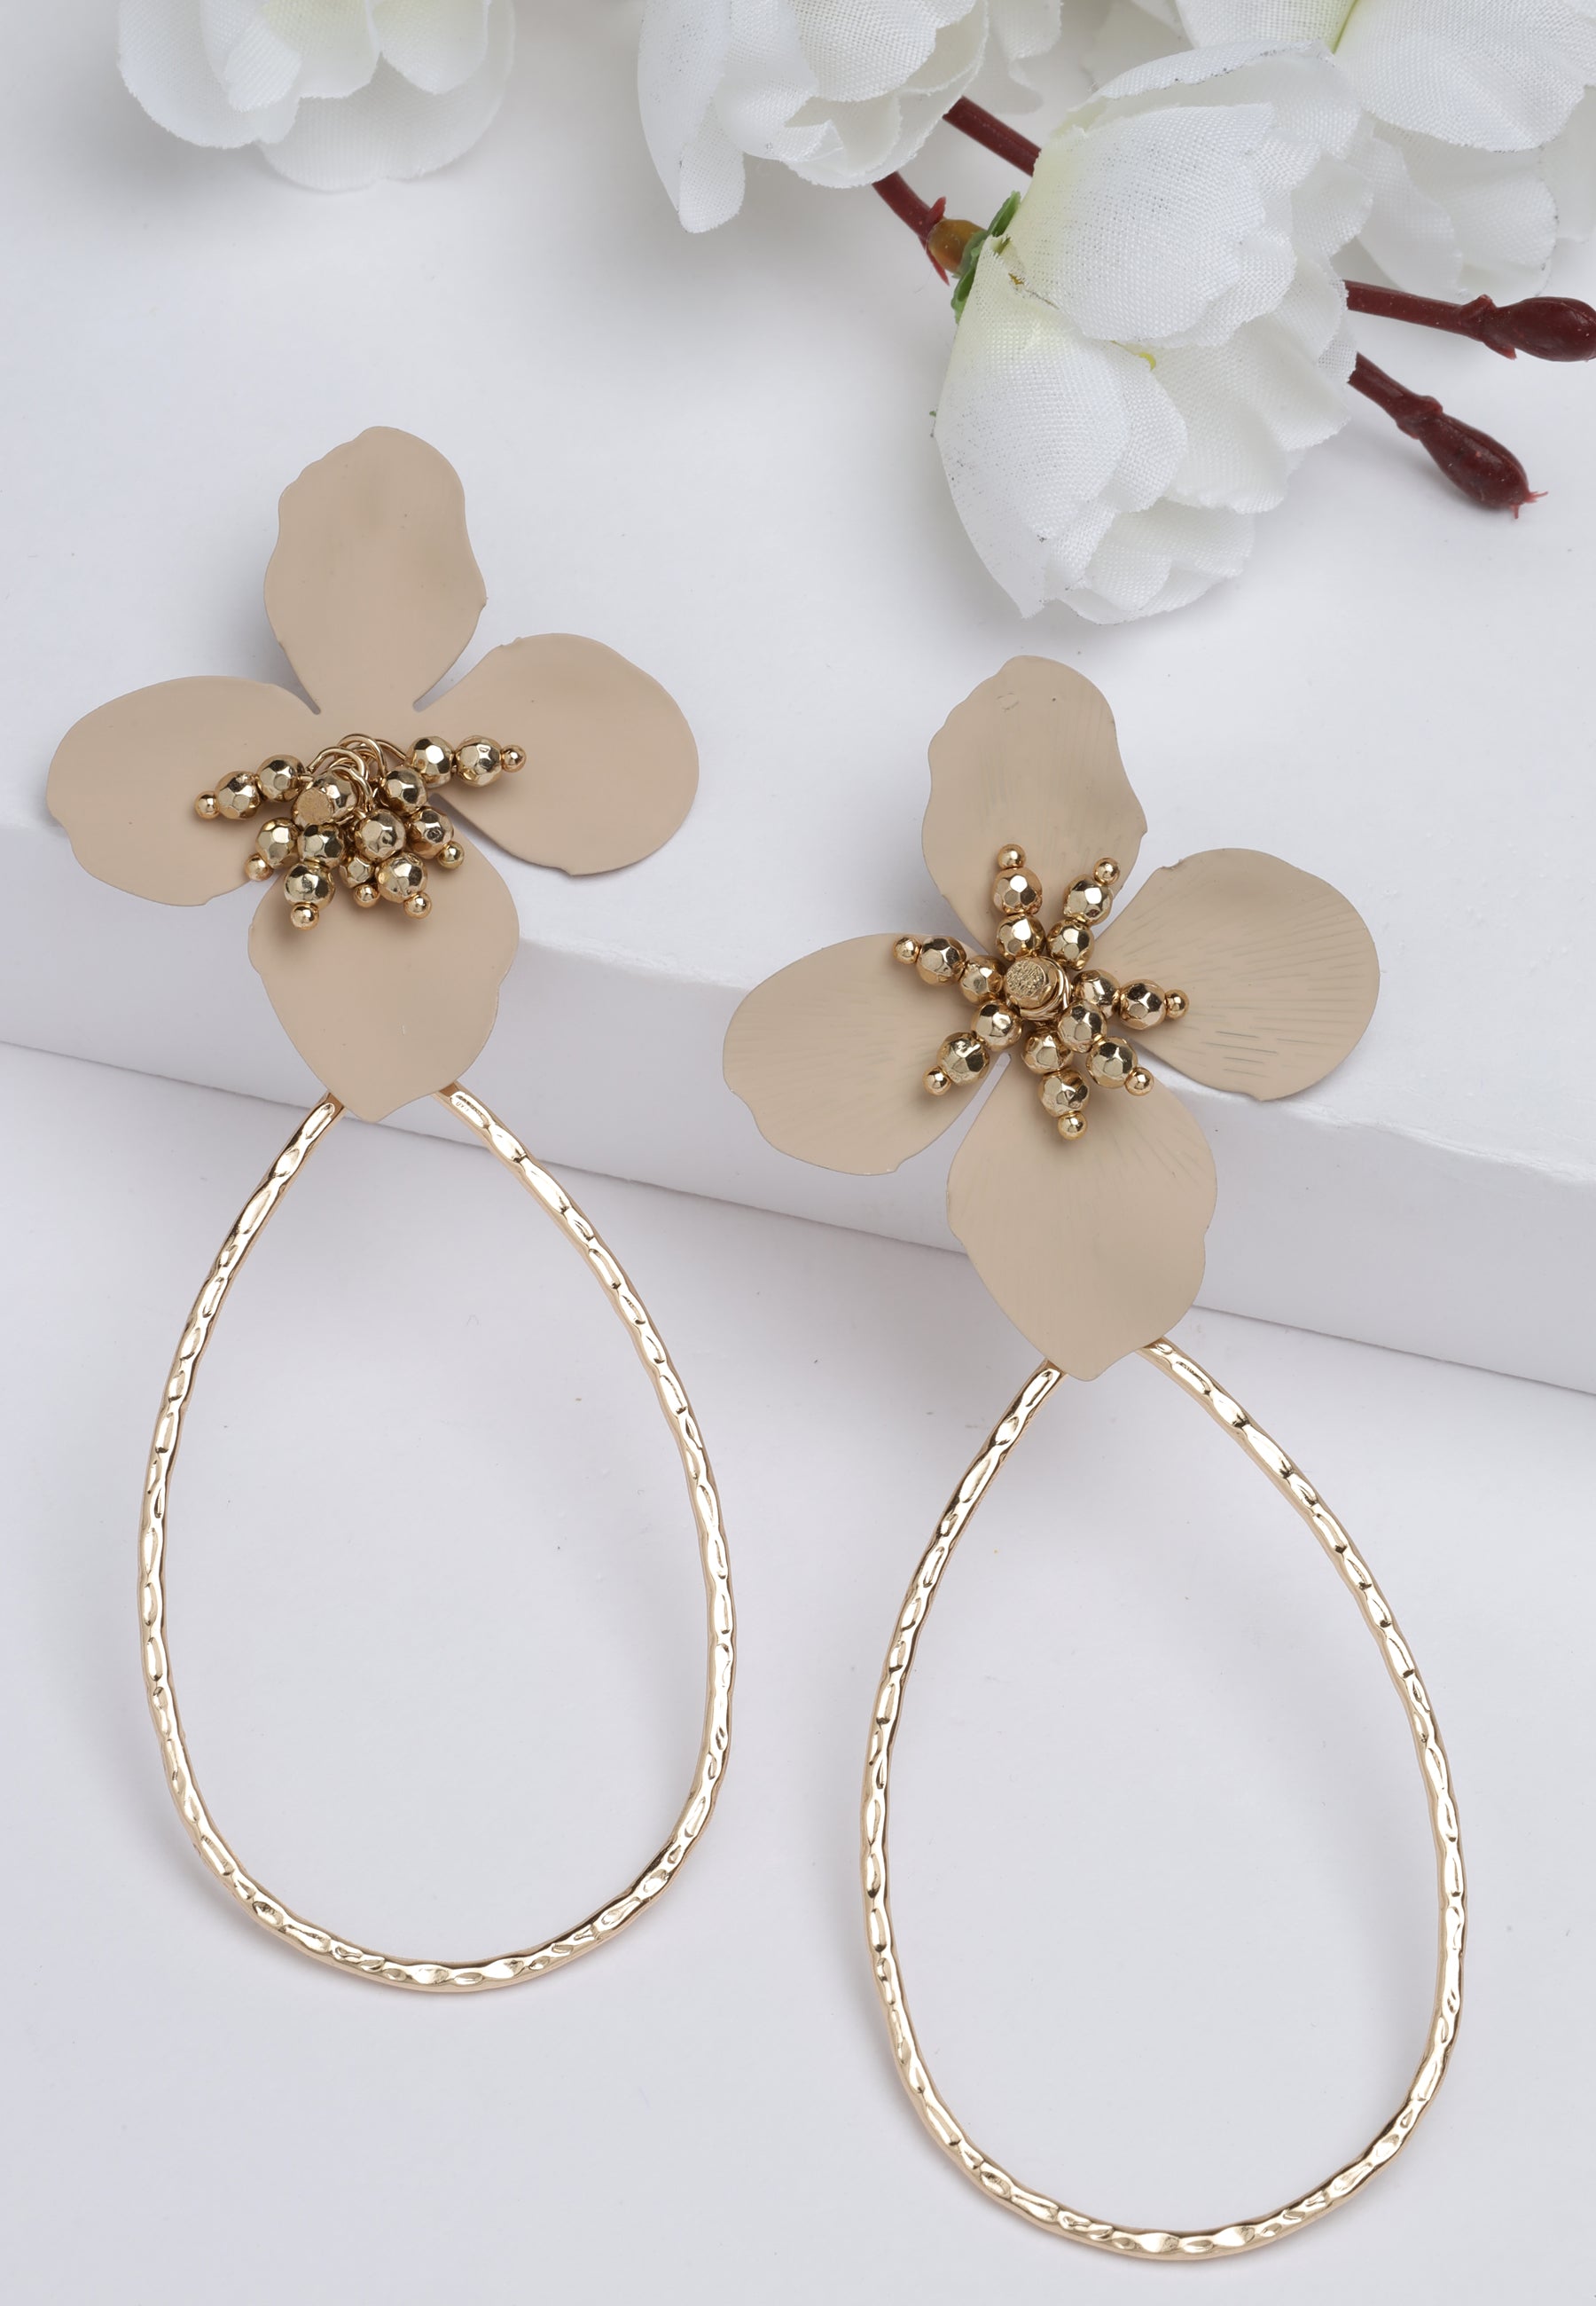 Plum Blossom Earrings in Beige